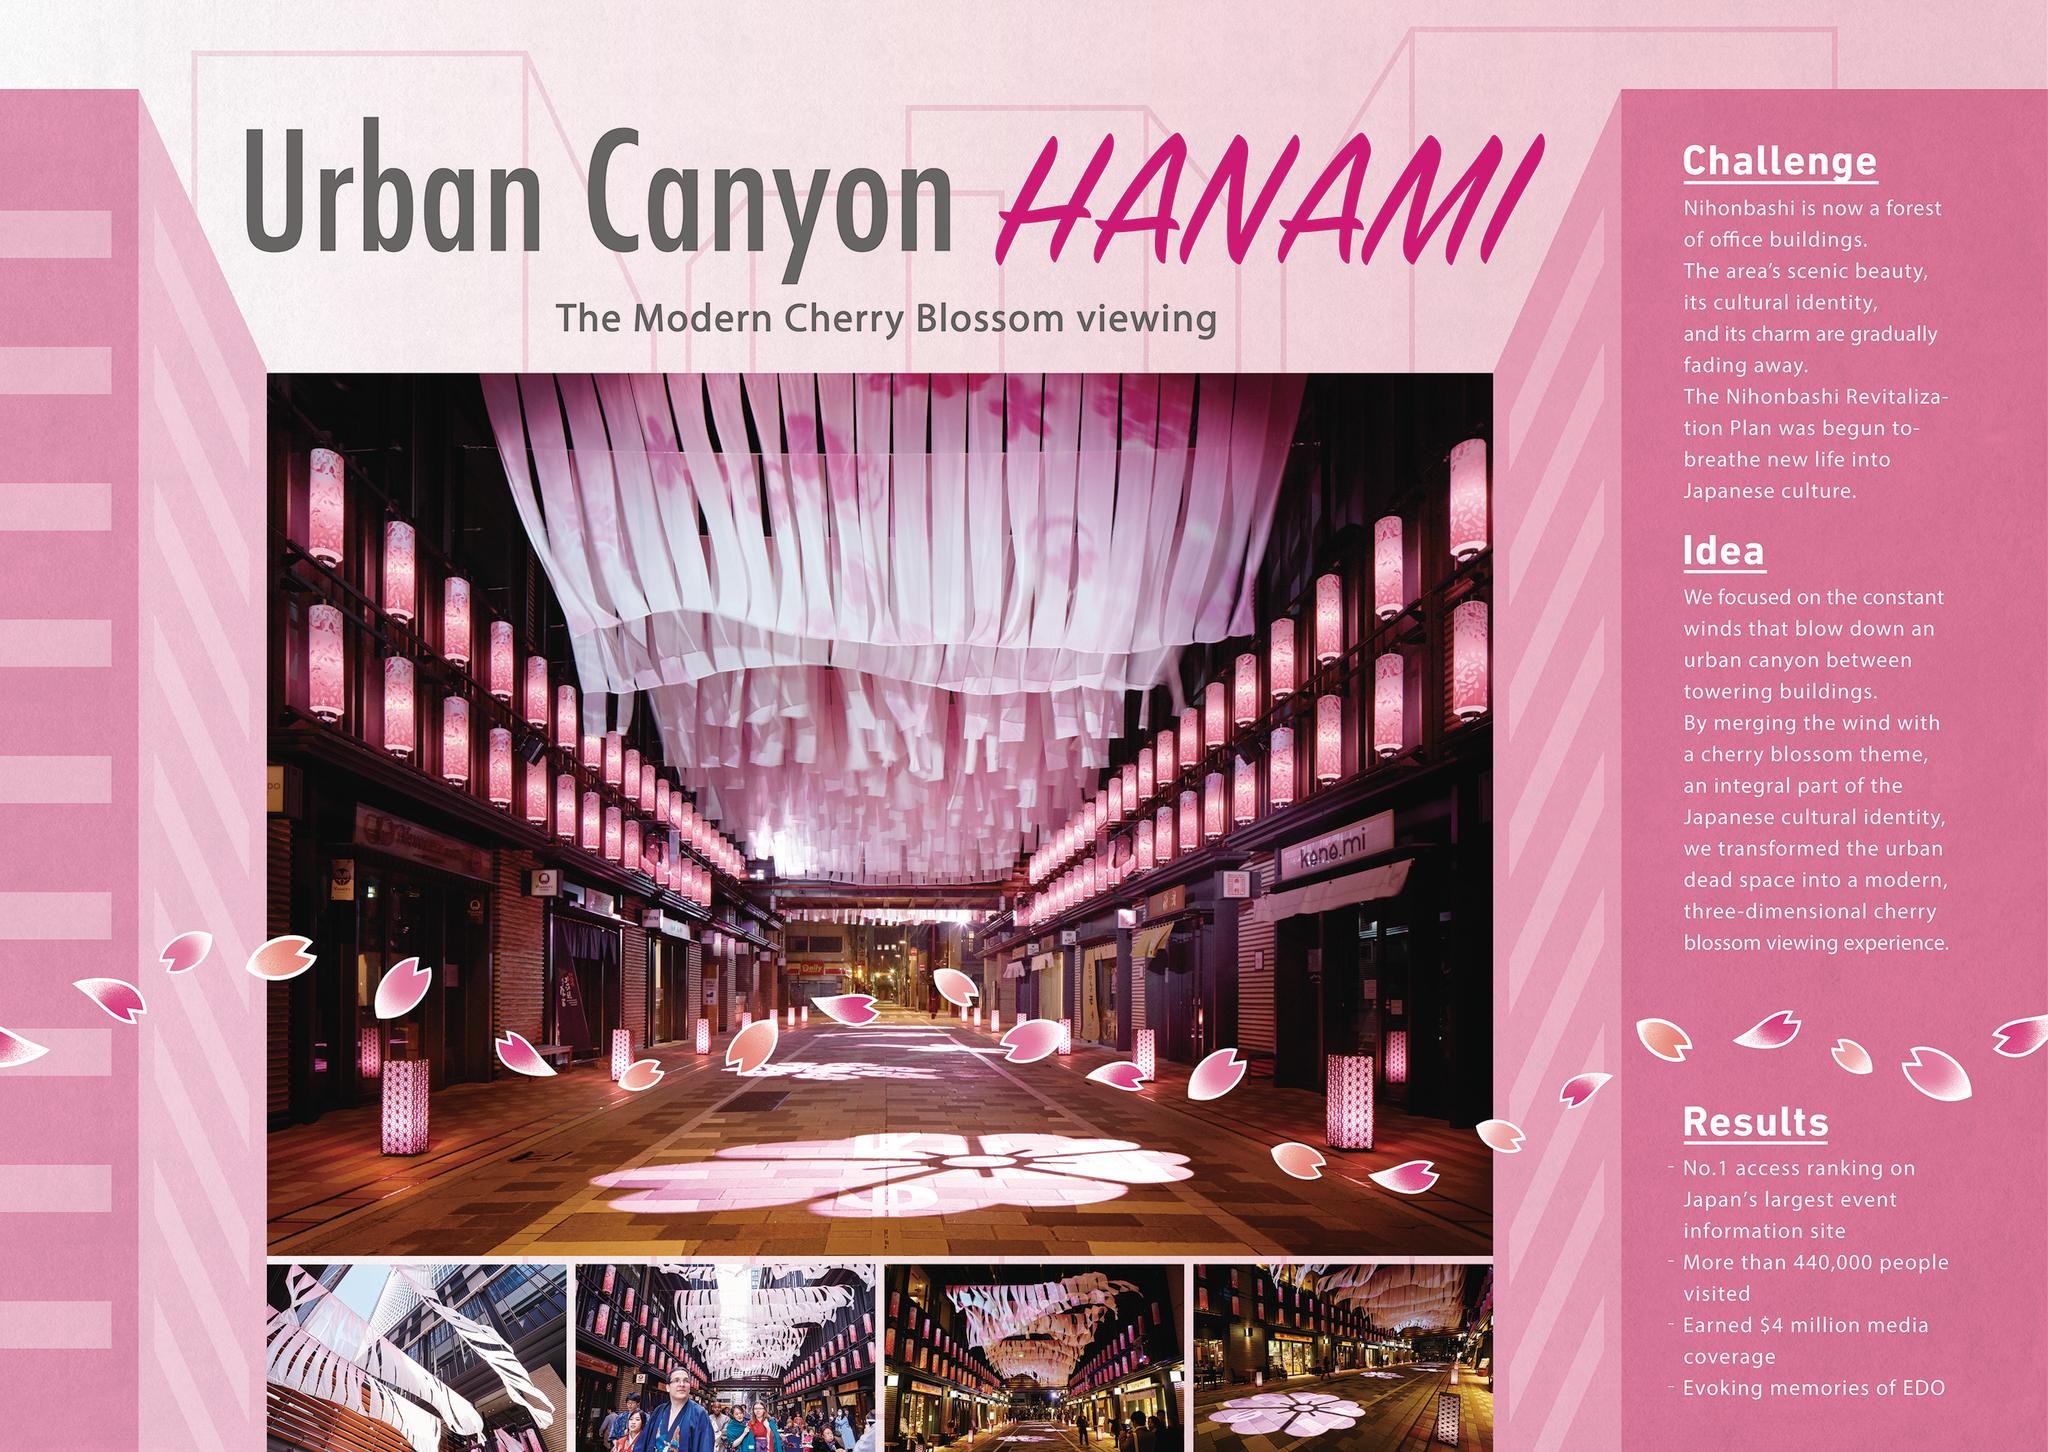 Urban Canyon "Hanami"